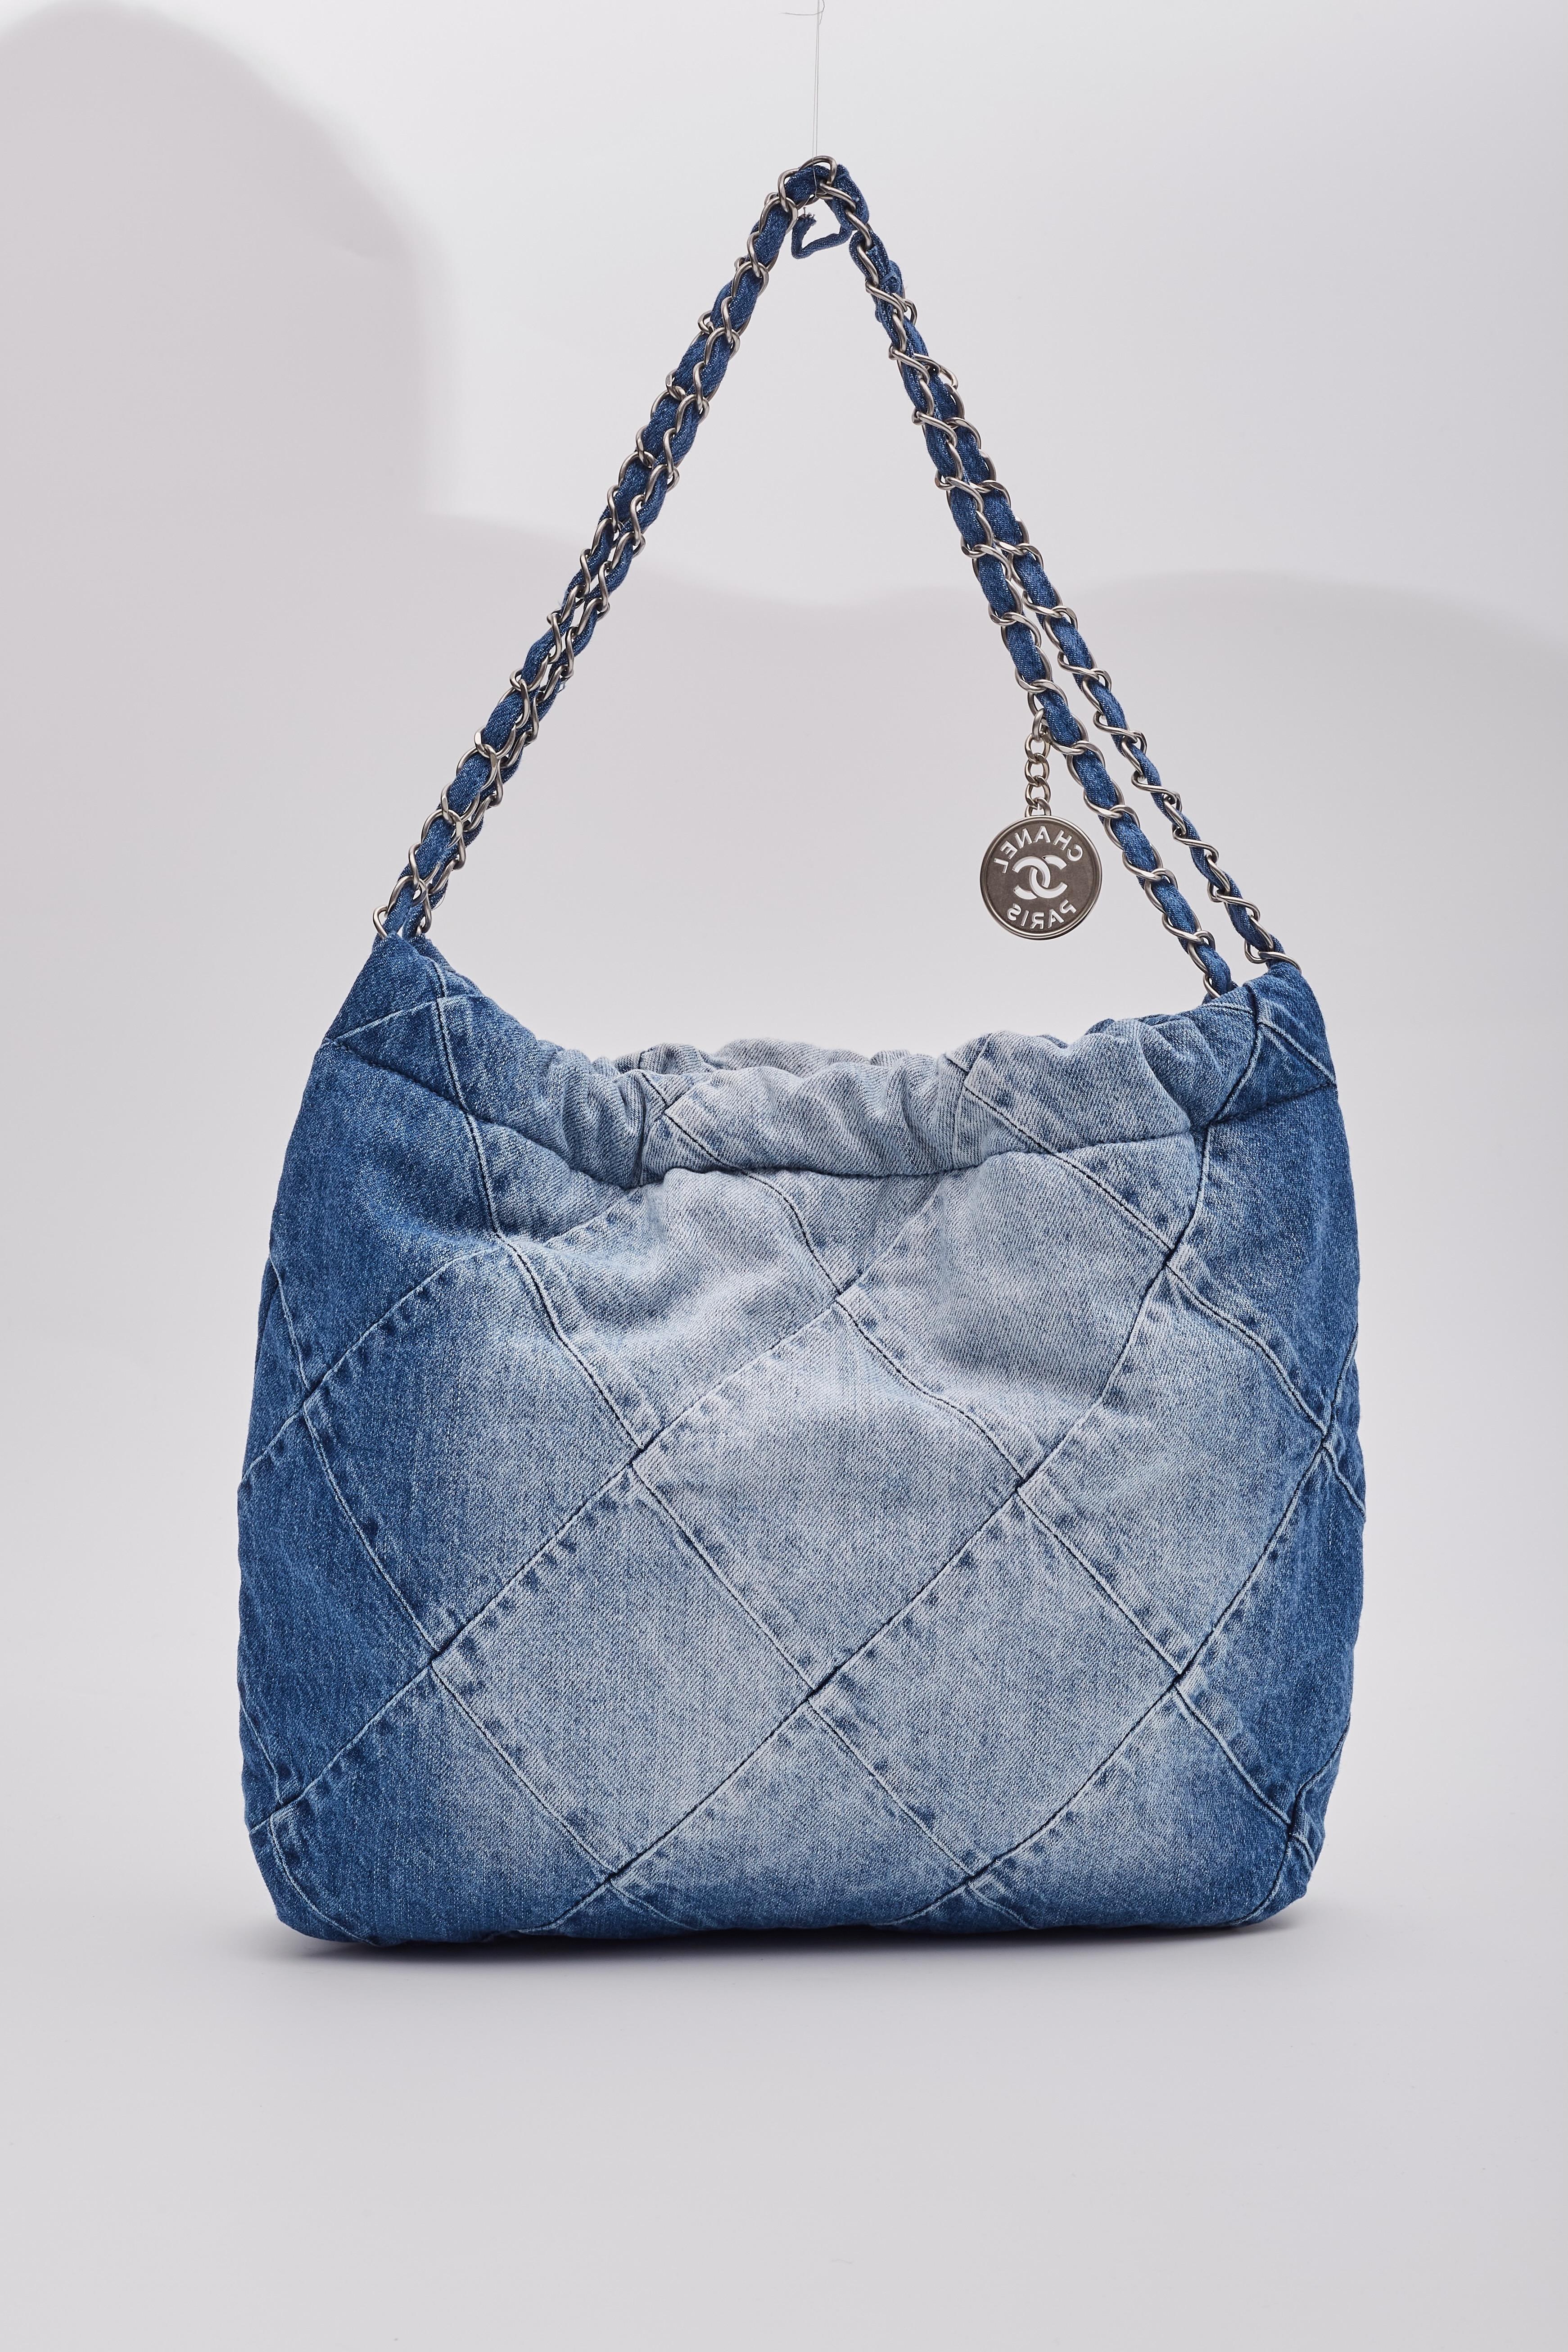 Chanel Blue Denim Drawstring Chanel 22 Bag Medium 8